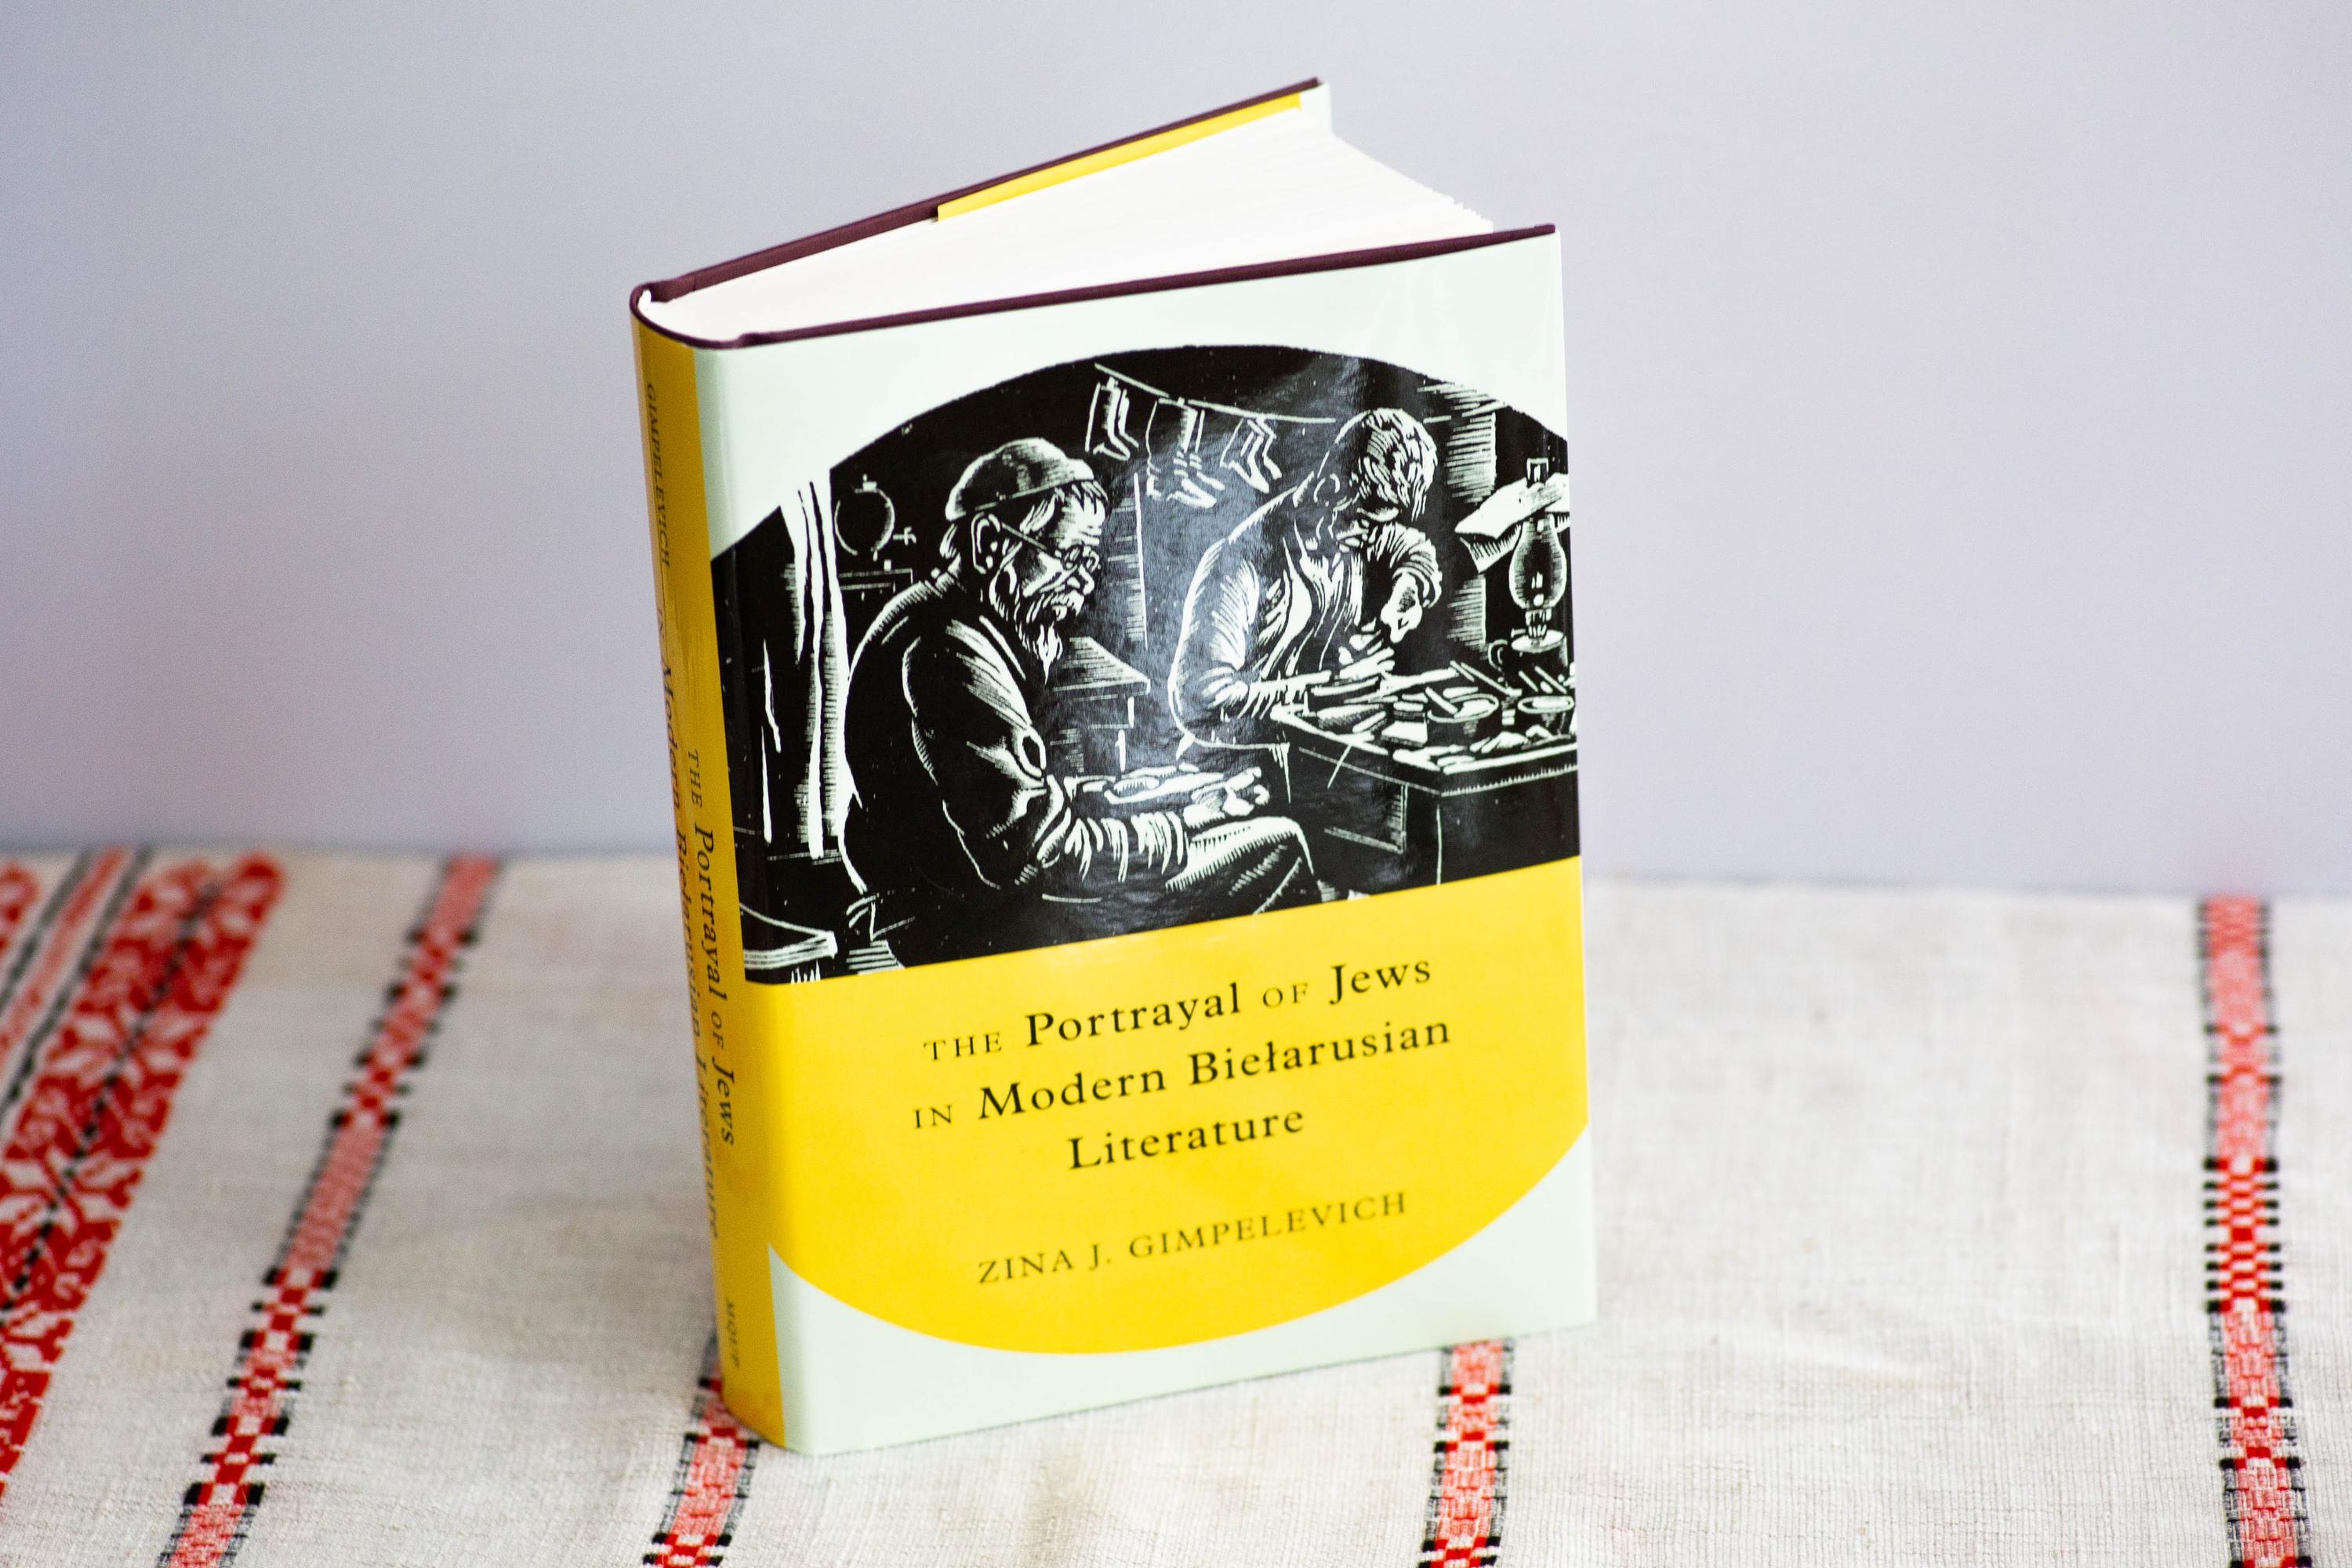 Zina Gimpelevich's book "The Portrayal of Jews in Modern Biełarusian Literature"